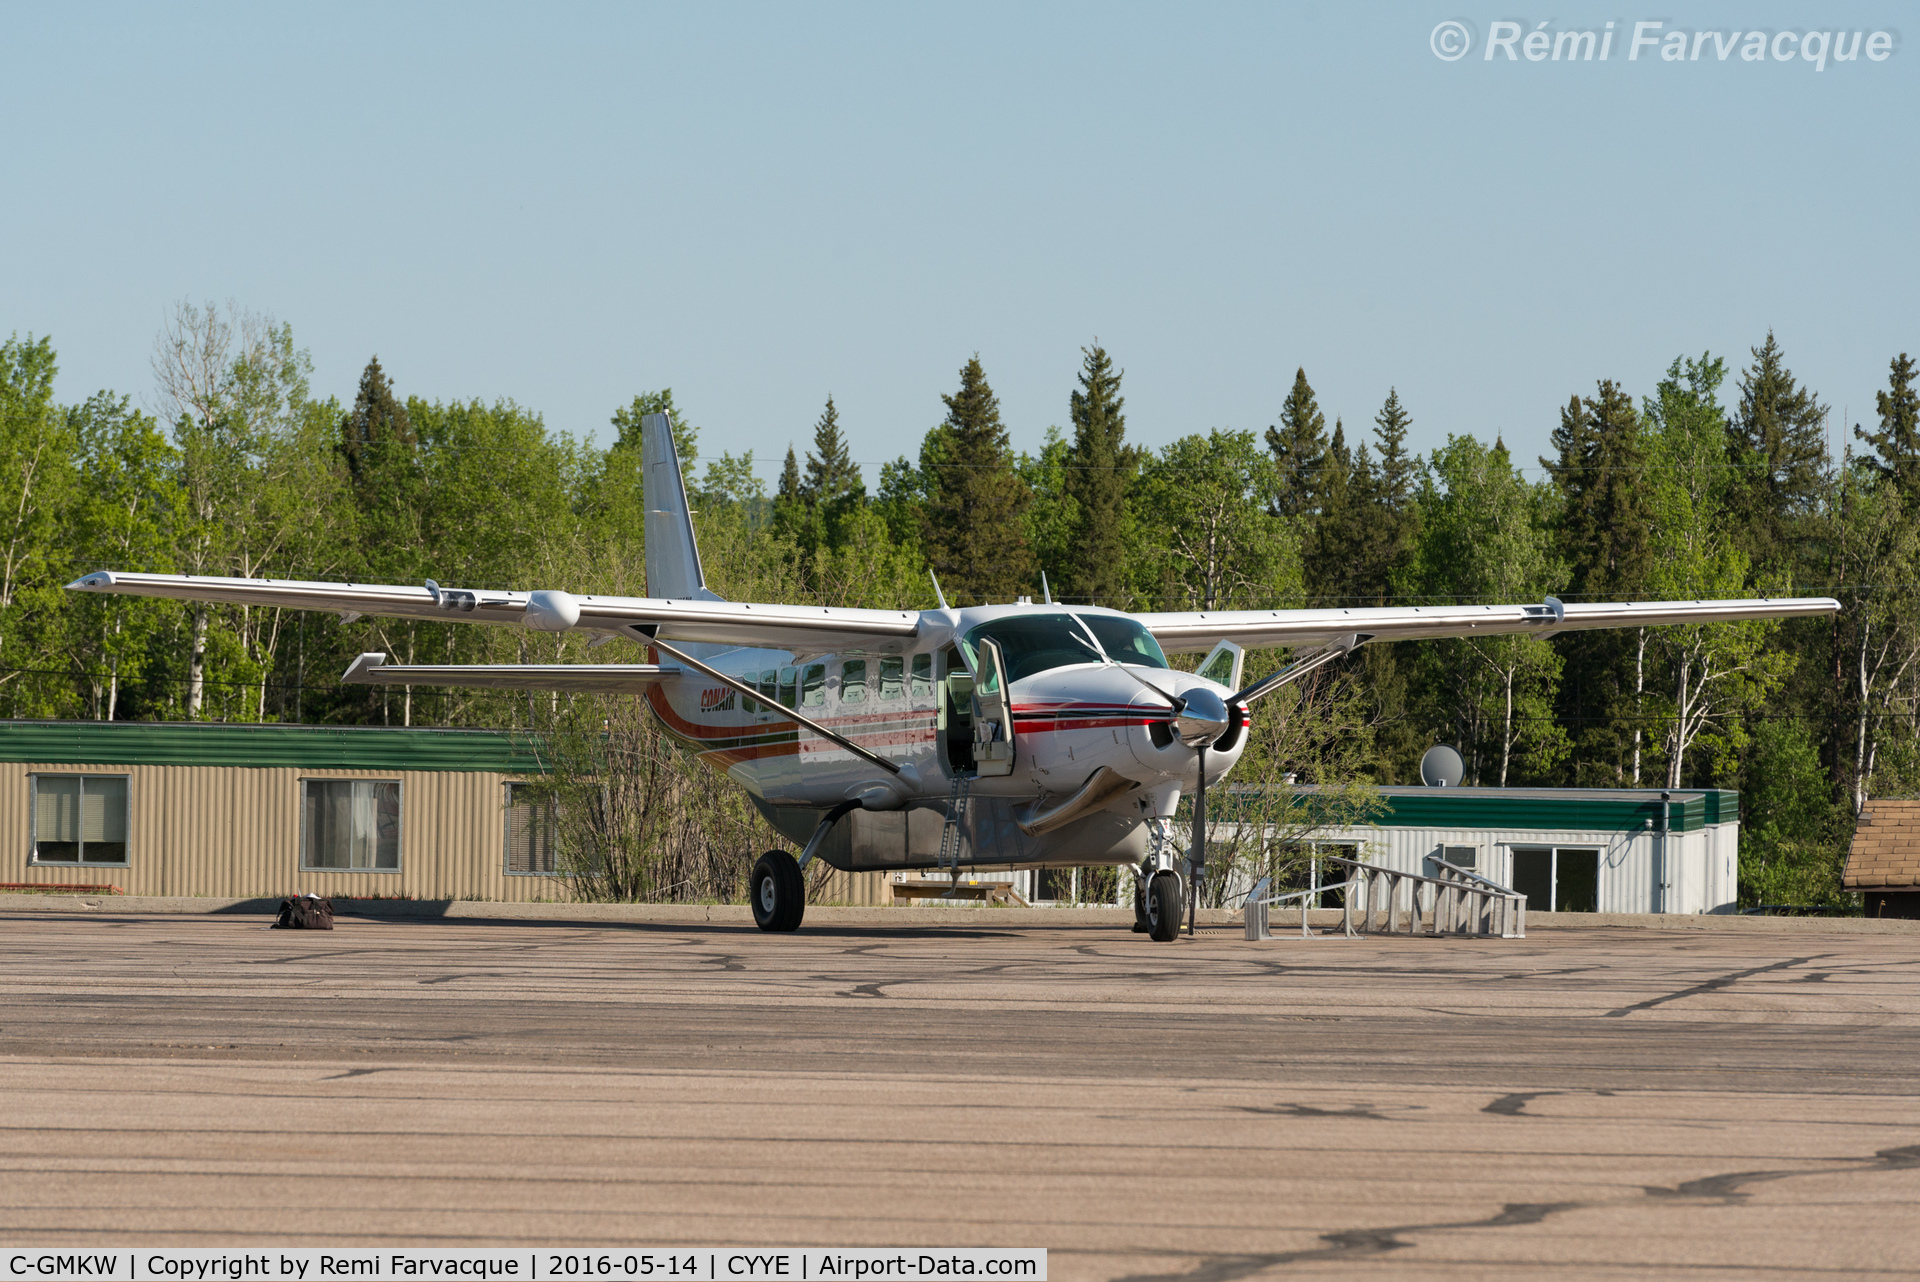 C-GMKW, 2013 Cessna 208B Grand Caravan C/N 208B5017, Parked at extreme NE corner of airport.